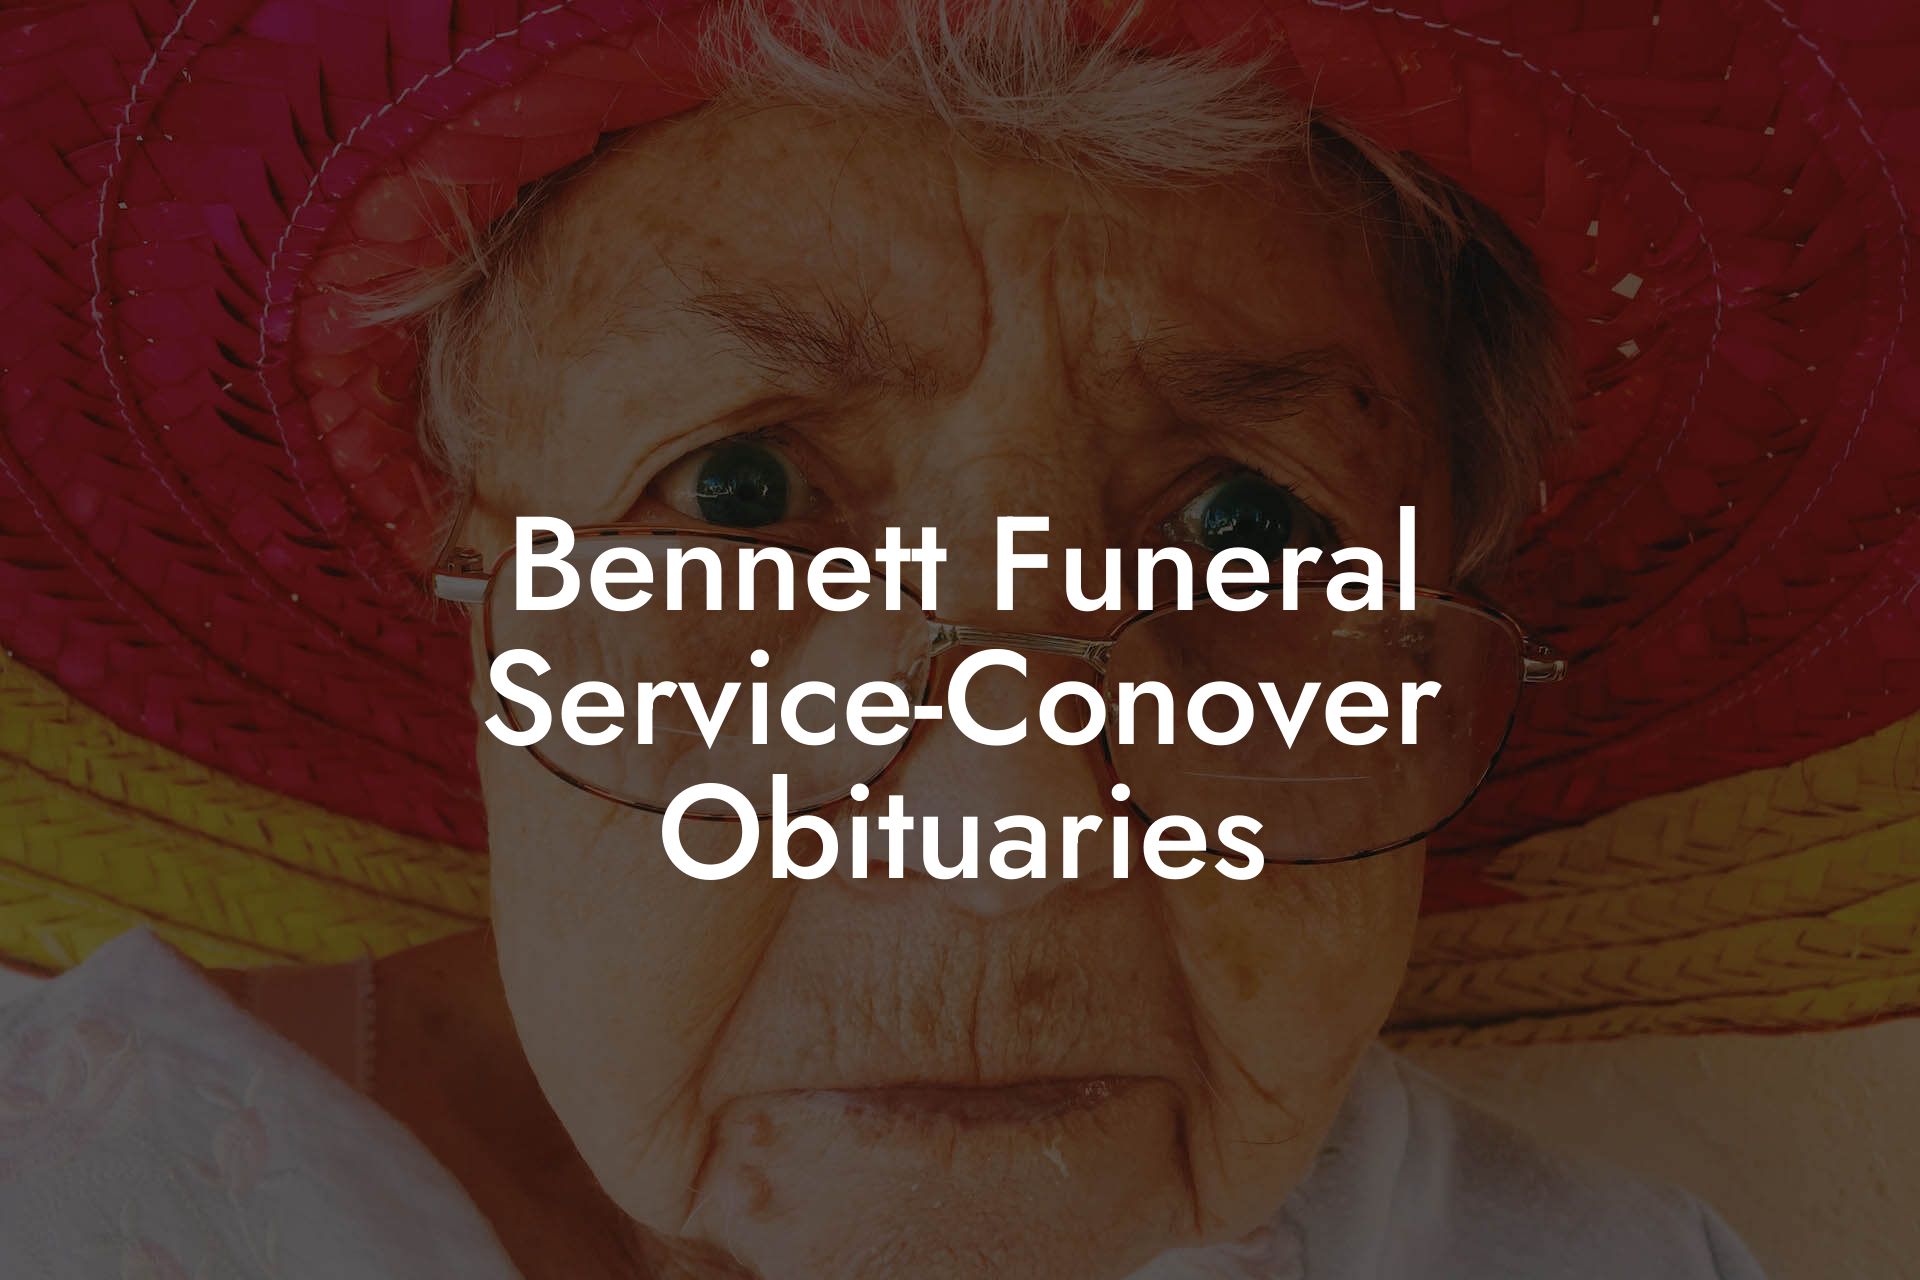 Bennett Funeral Service-Conover Obituaries